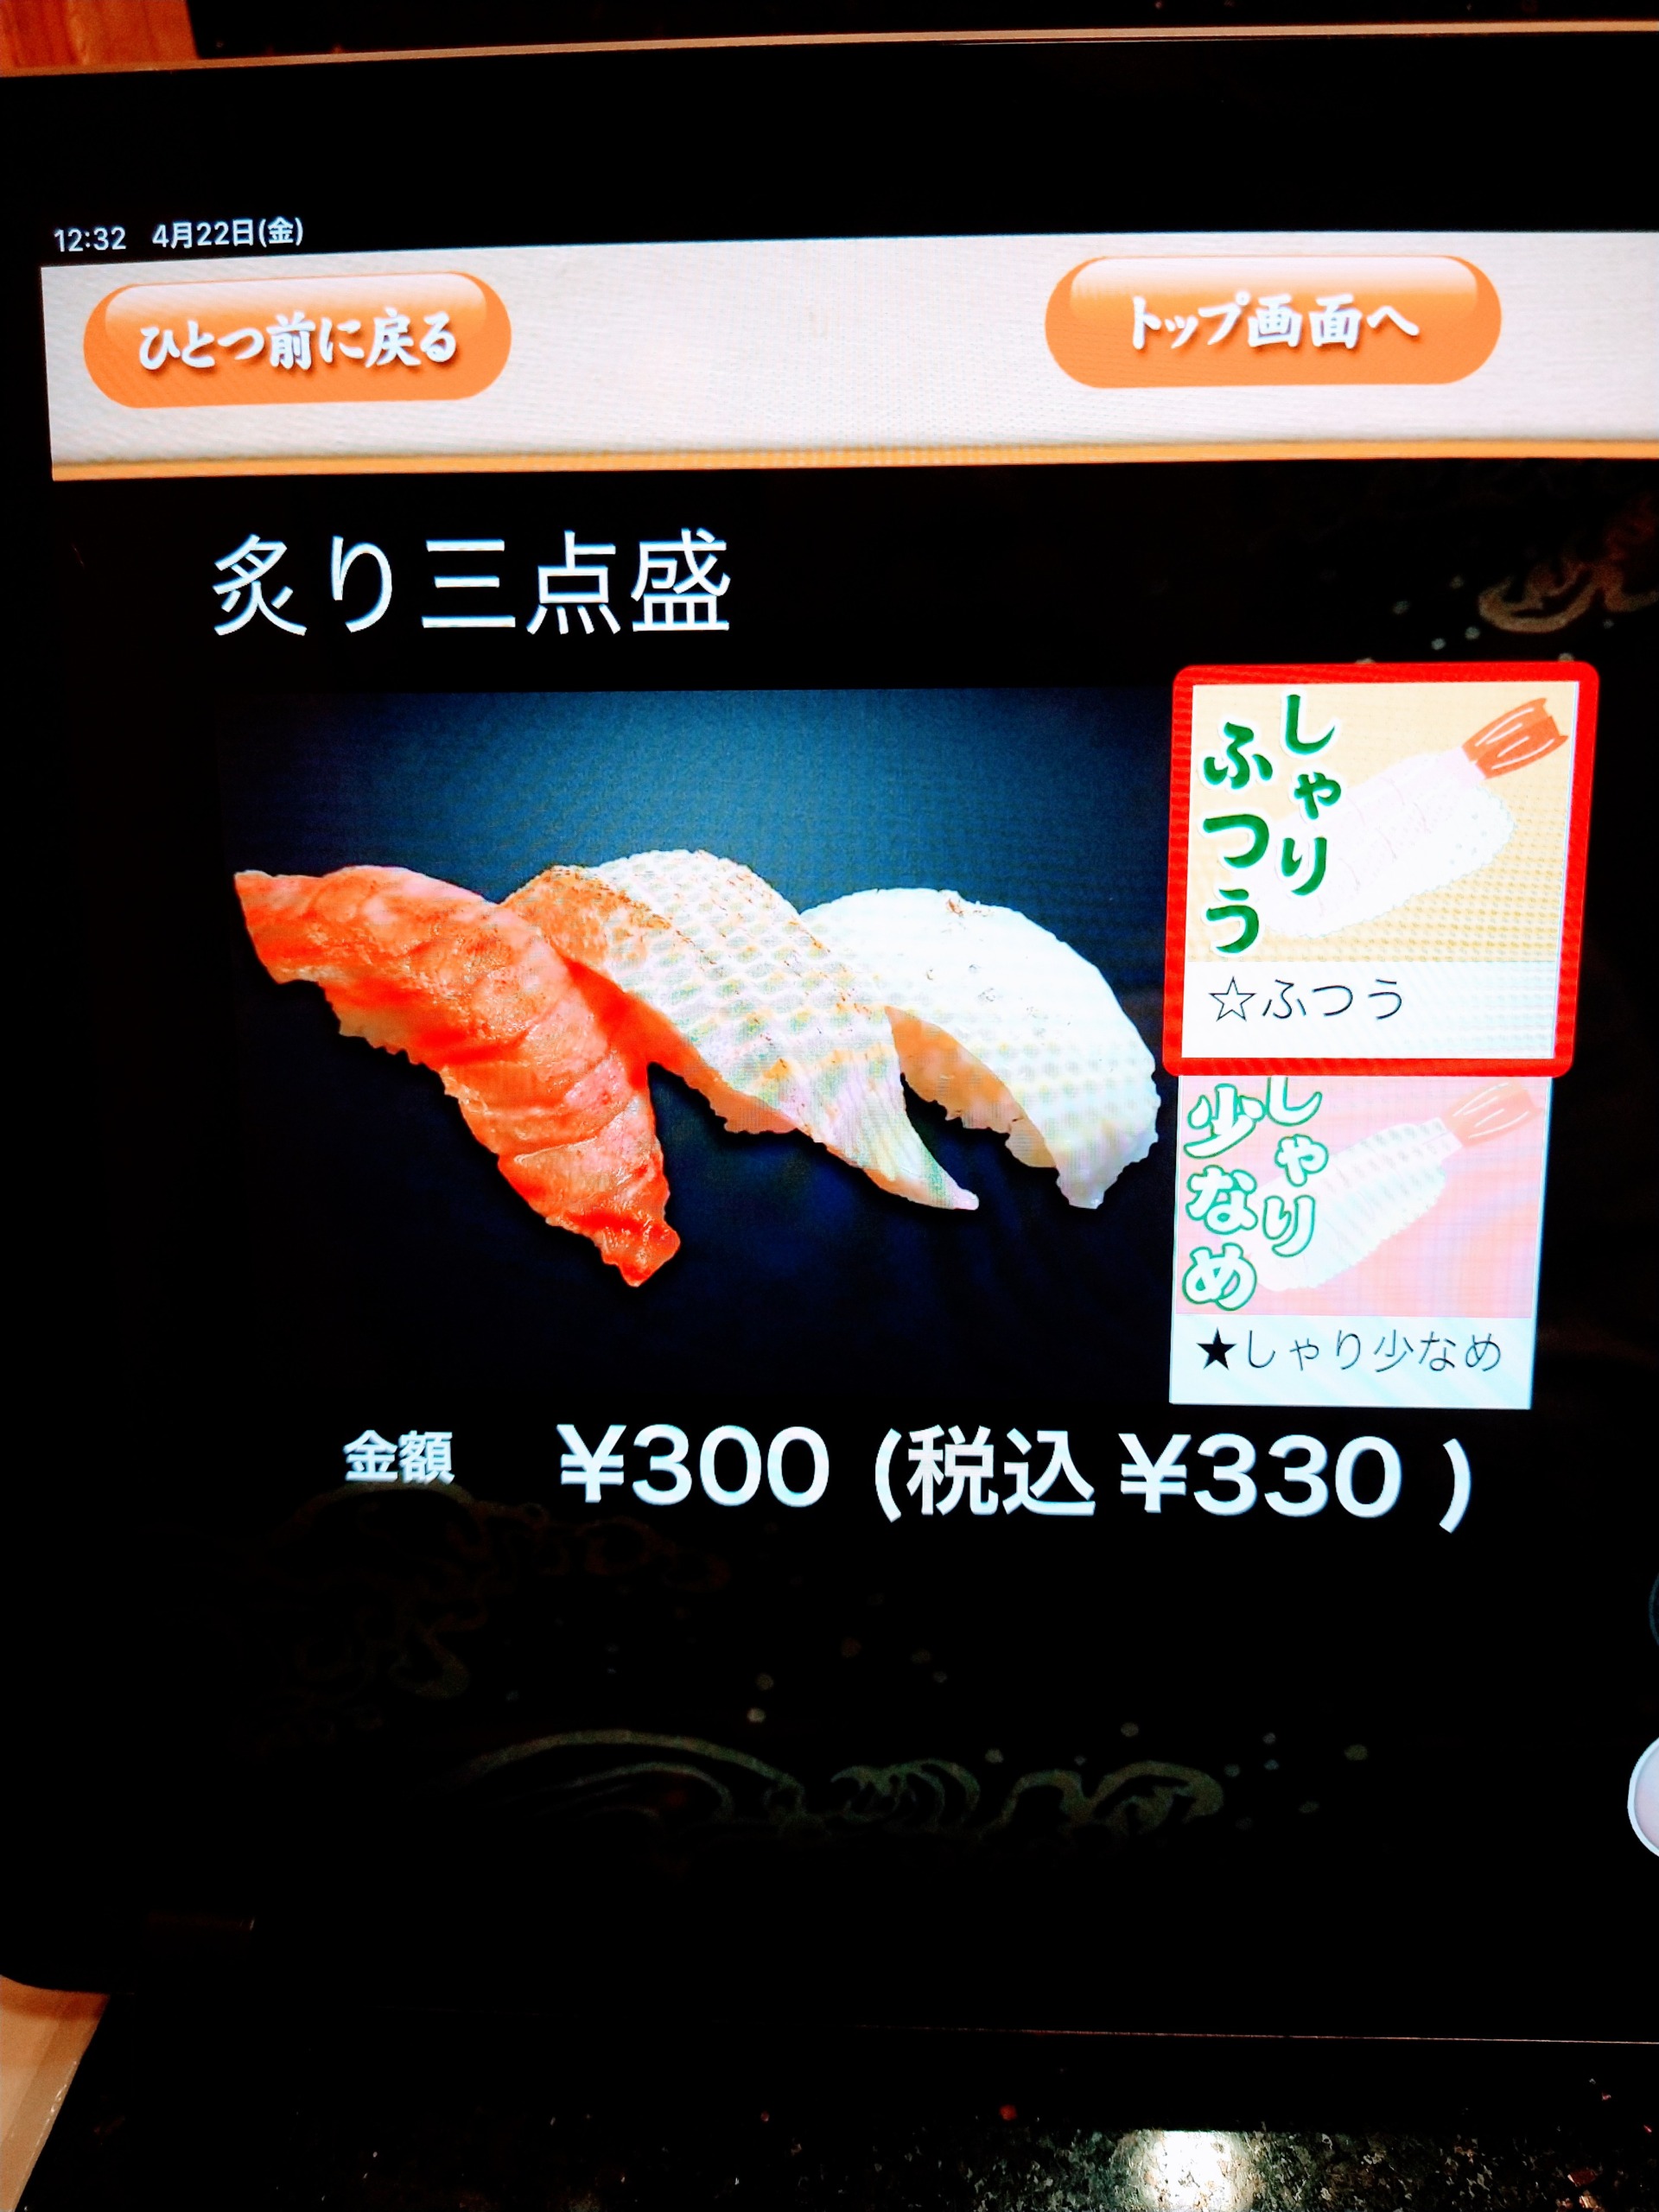 koma-zushi-menu-10